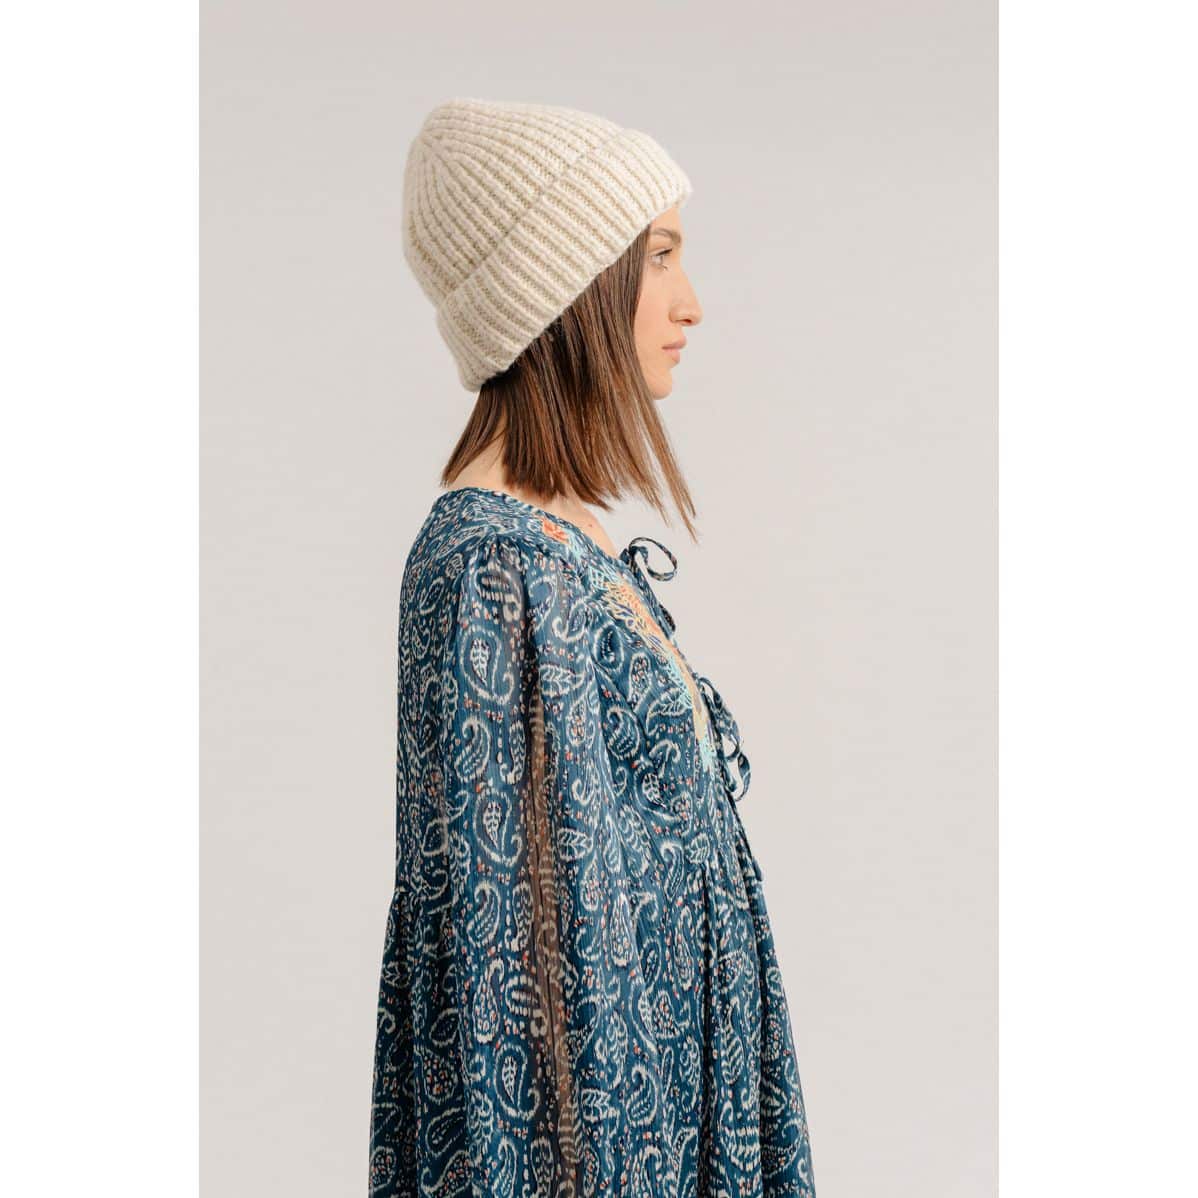 Molly Bracken - Ladies Knitted Hat - Offwhite (2)